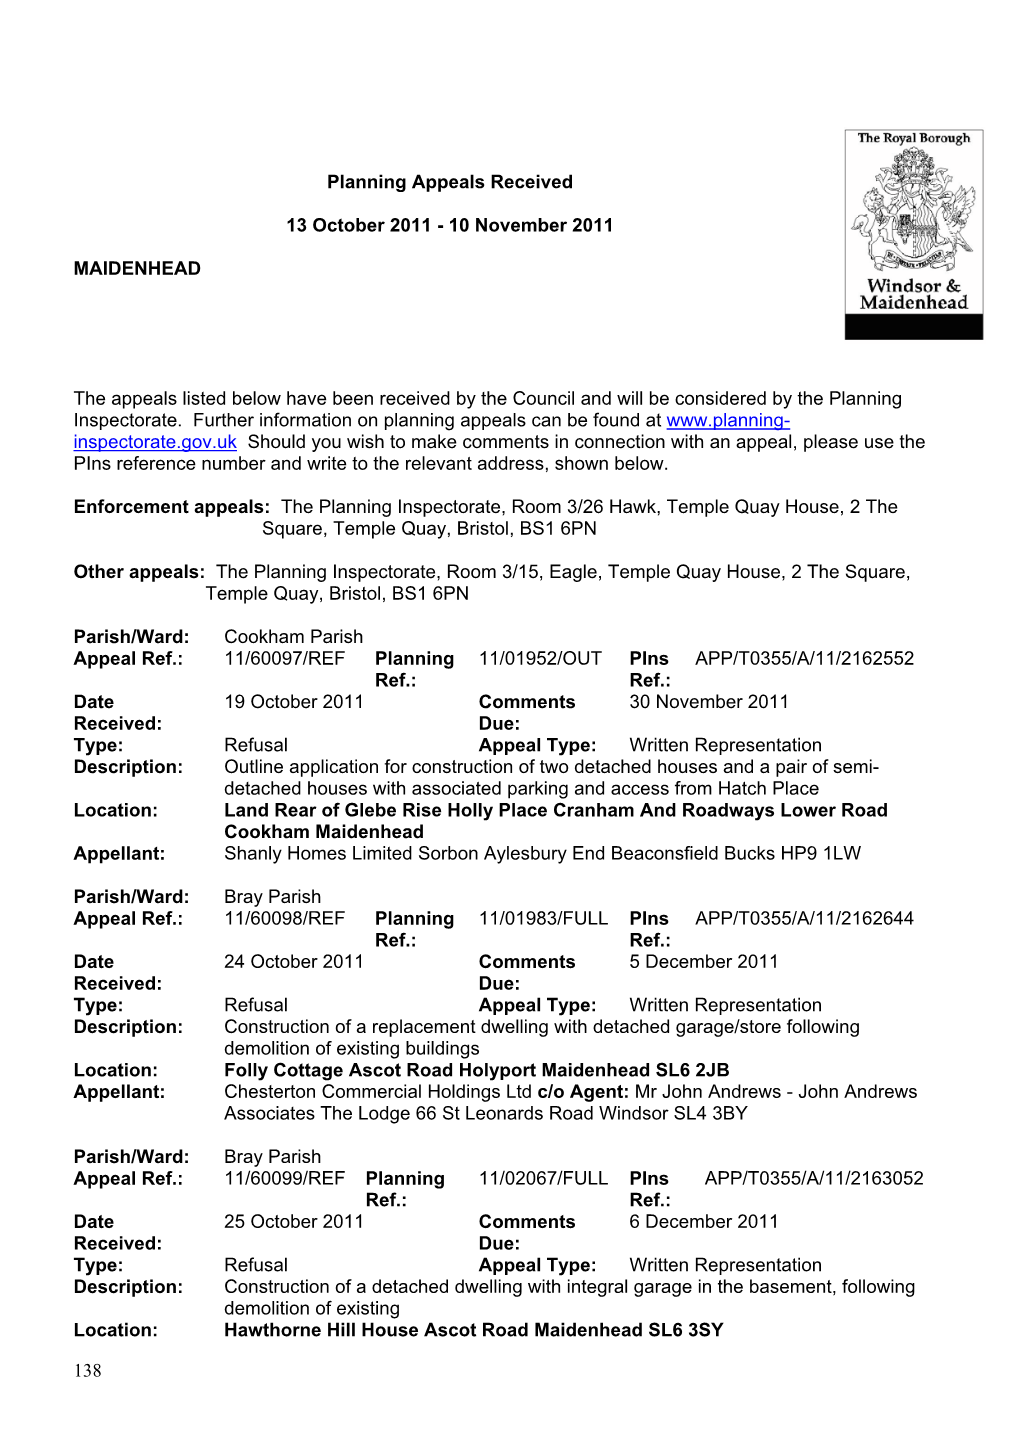 138 Planning Appeals Received 13 October 2011